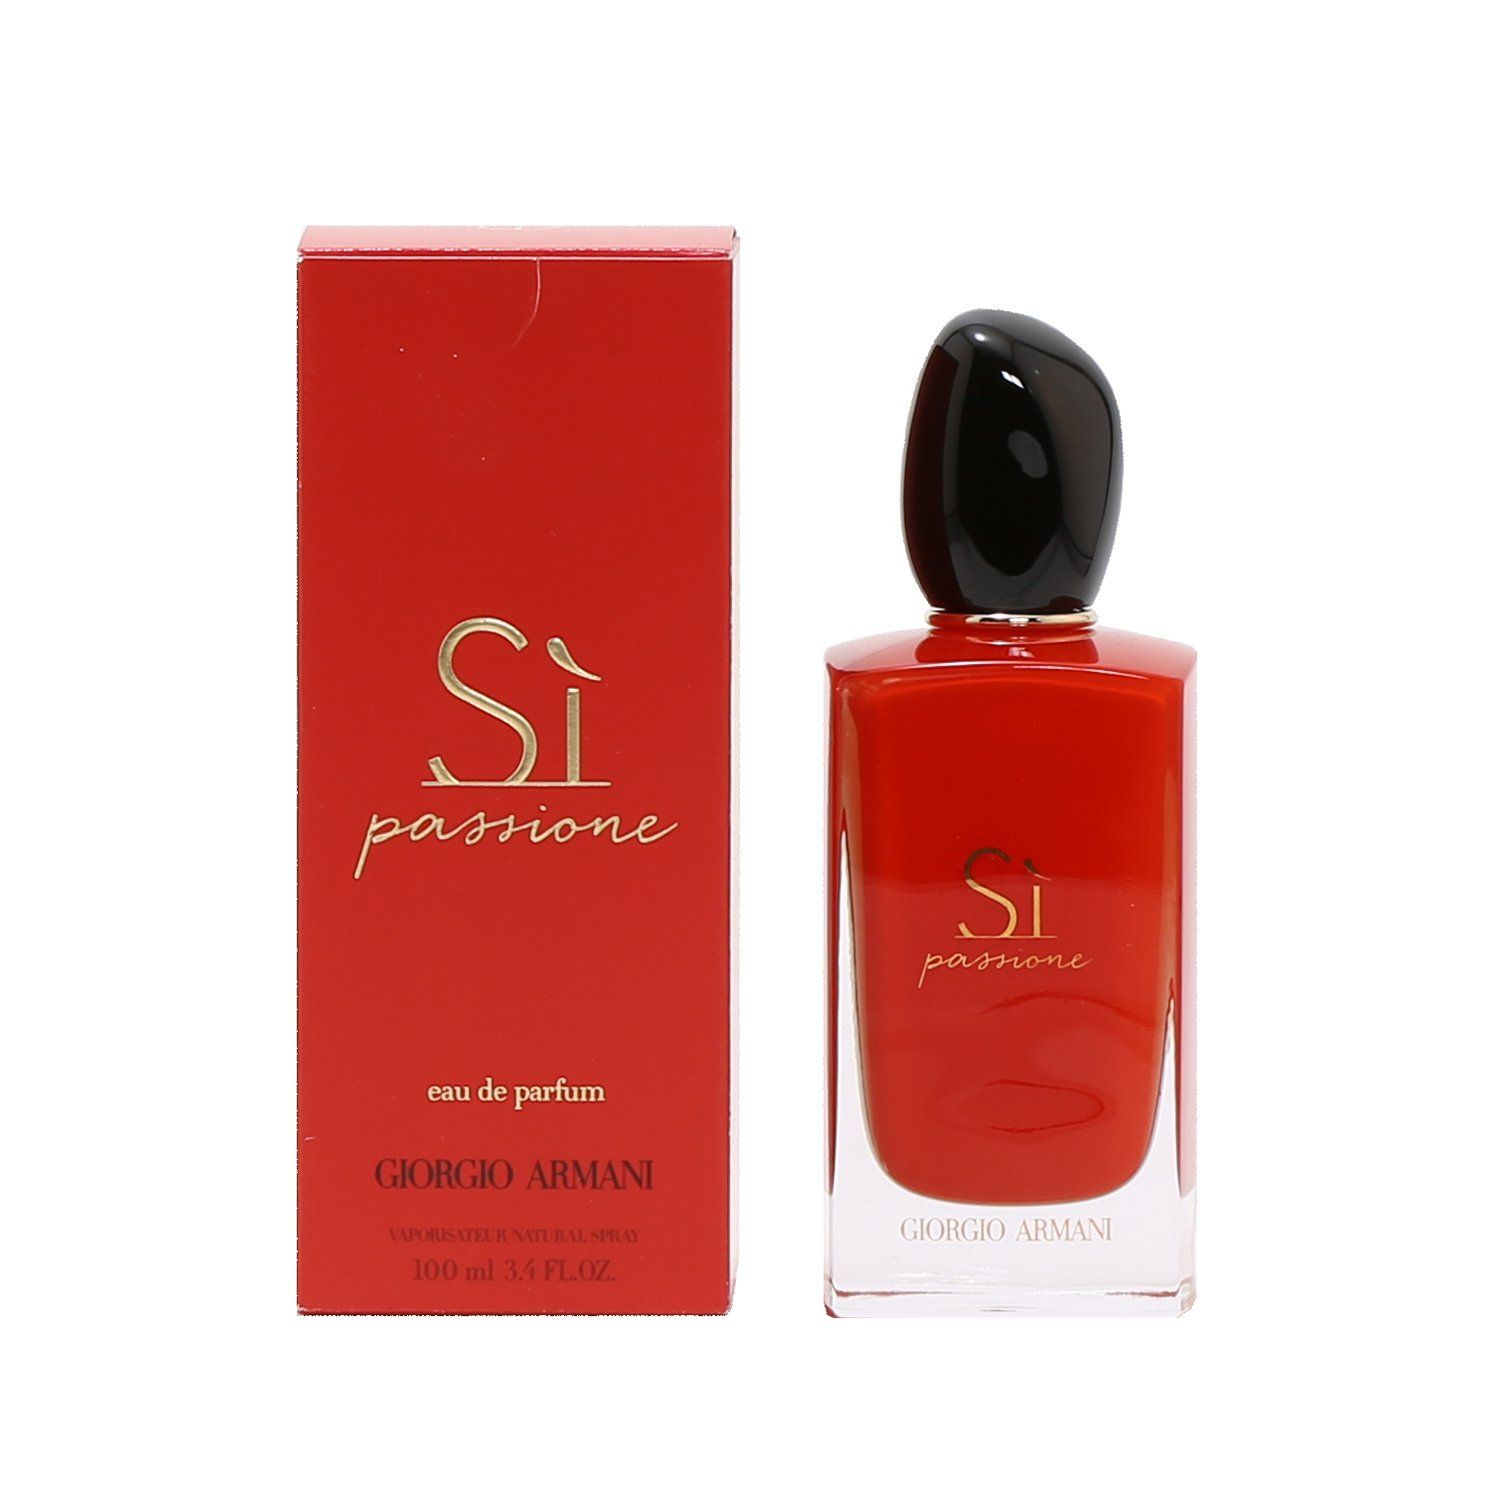 Perfume - GIORGIO ARMANI SI PASSIONE FOR WOMEN - EAU DE PARFUM SPRAY